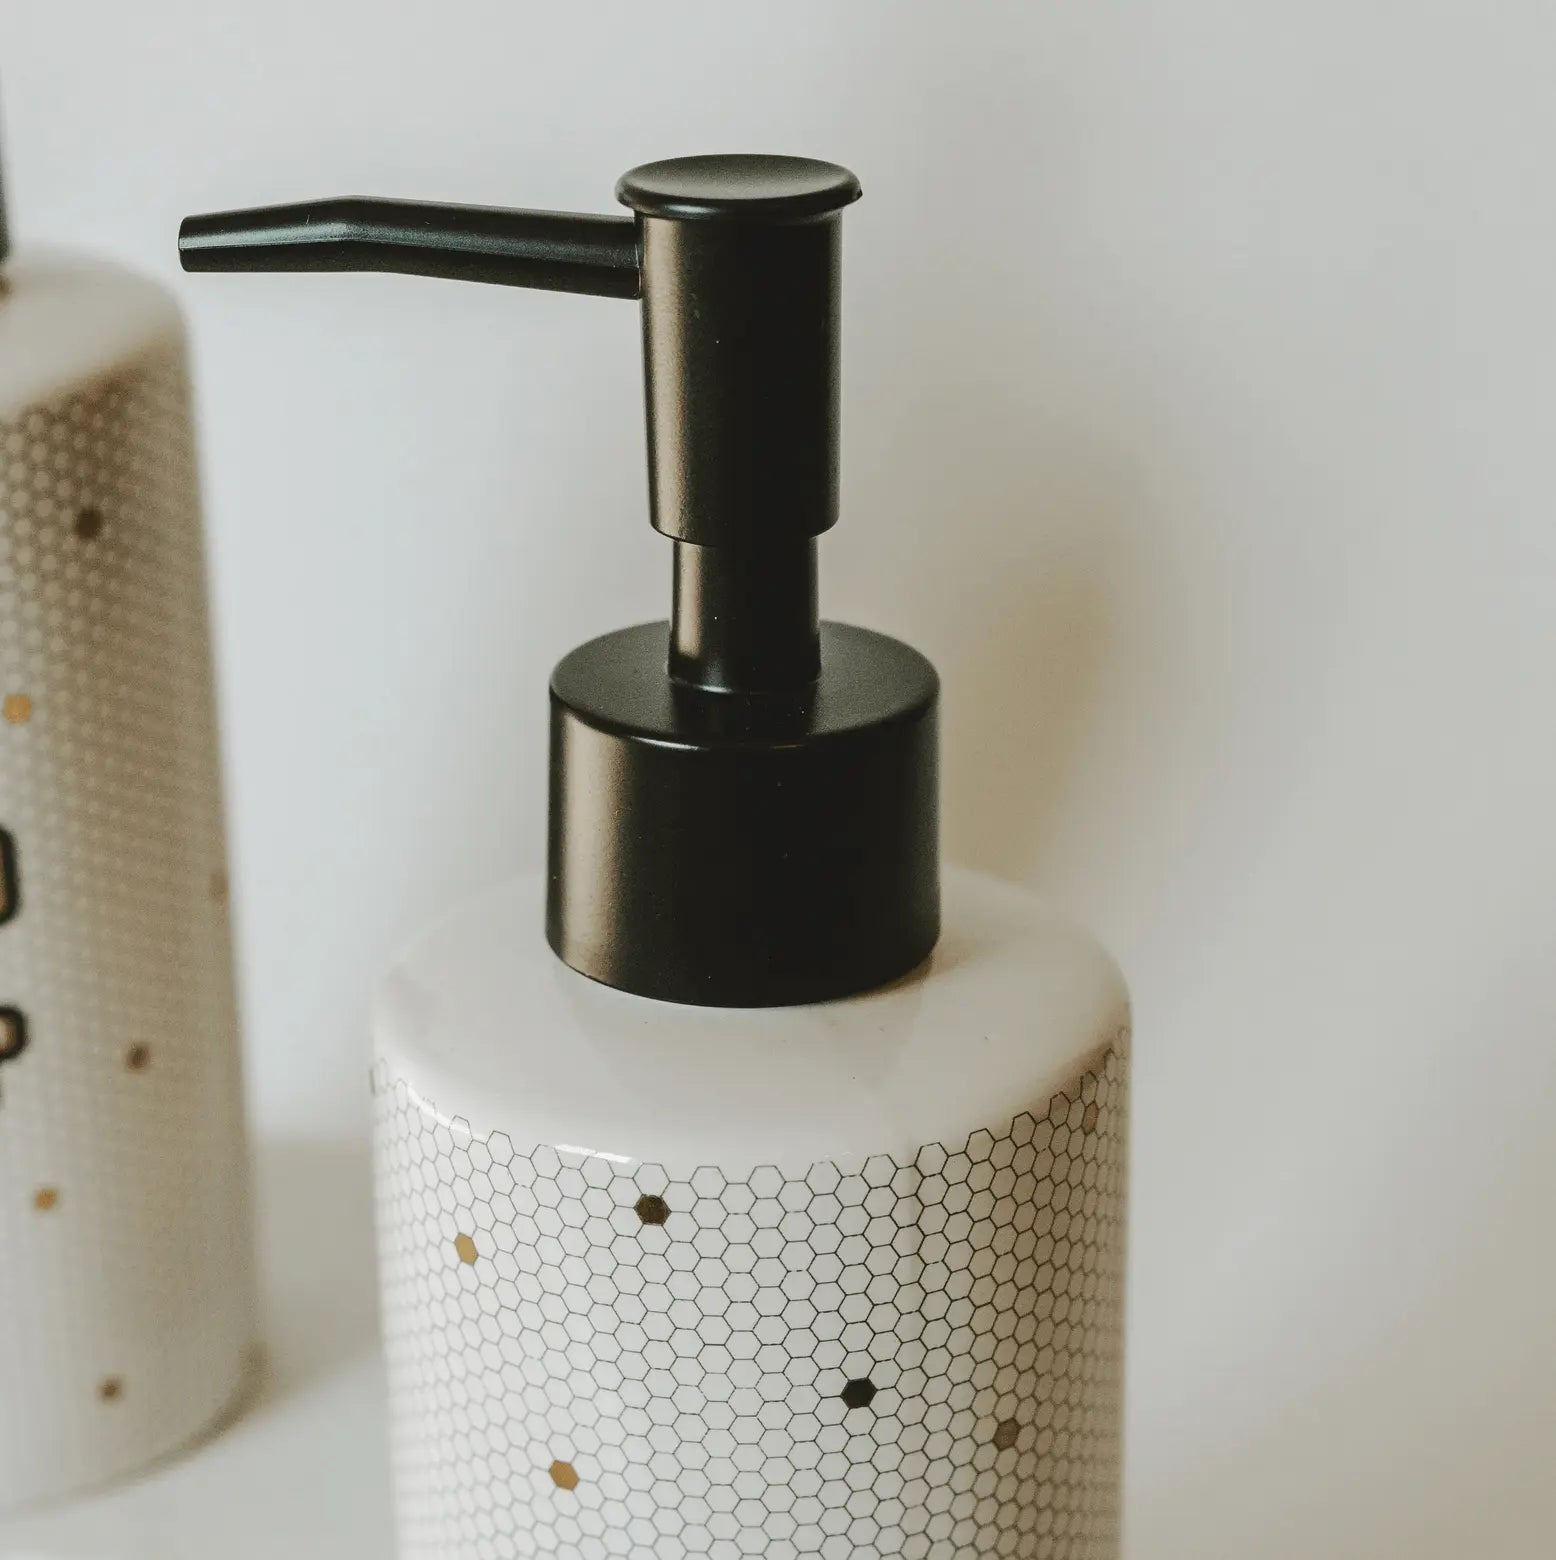 Honeycomb Tile Hand & Dish Soap Dispensers - White, Gold, Black